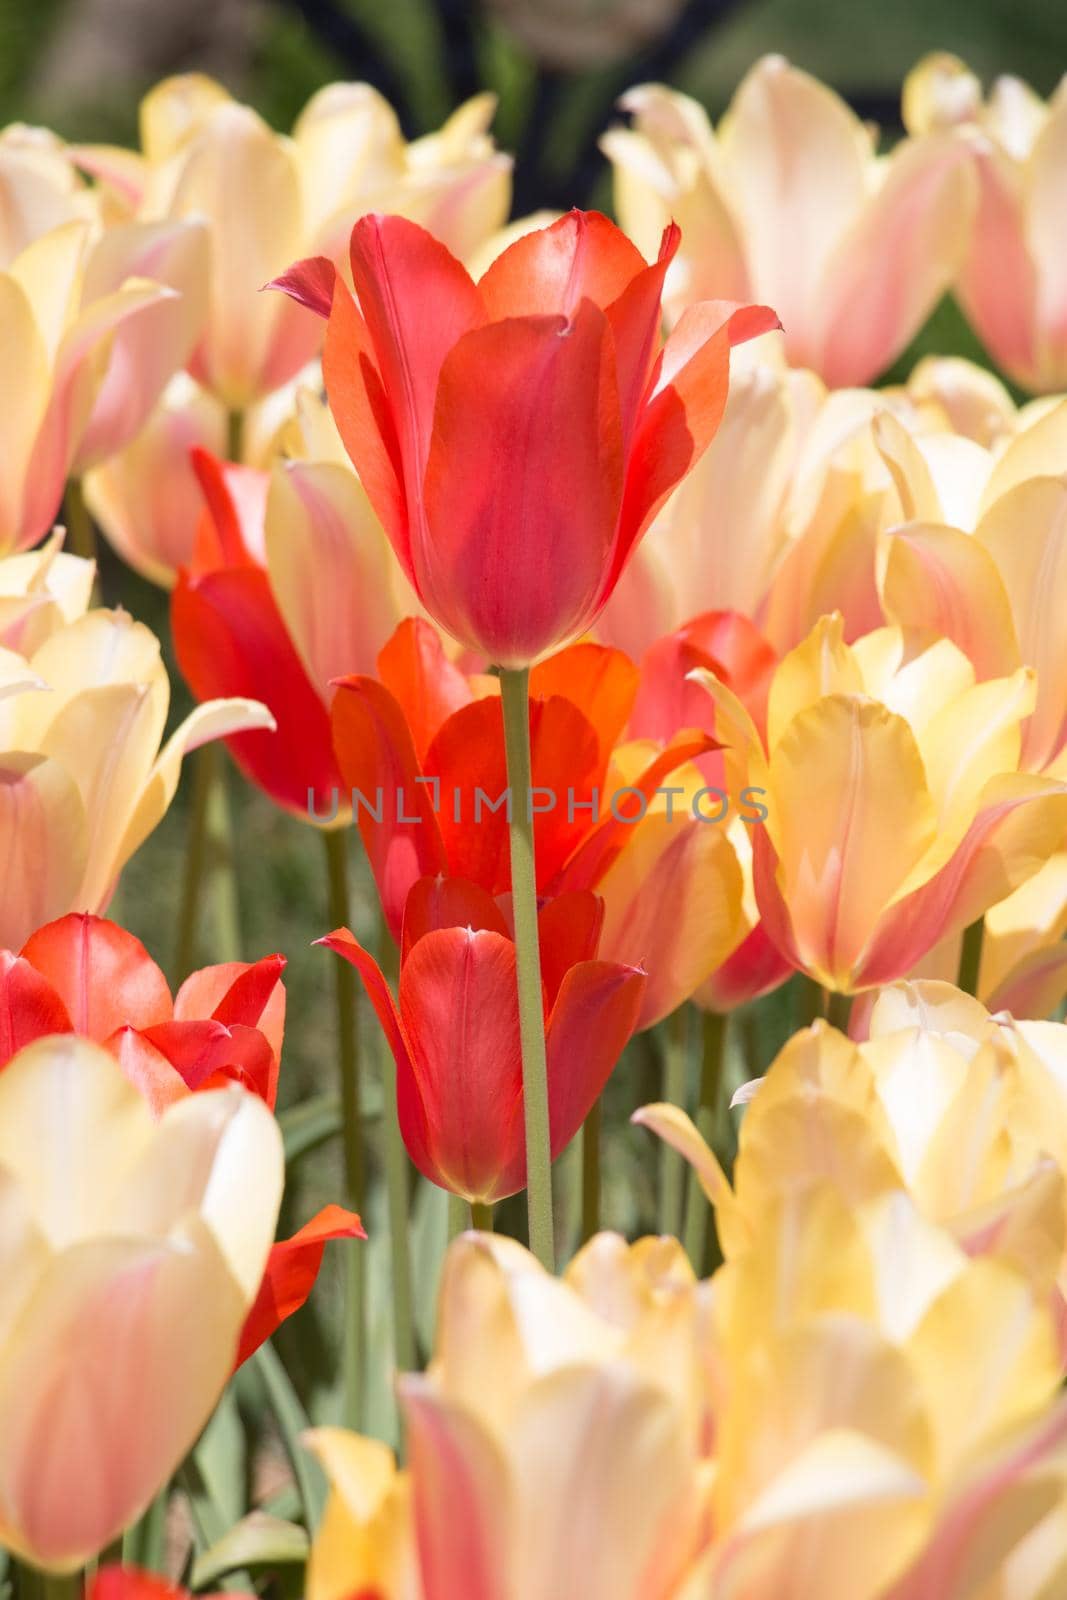 Colorful tulip flower bloom in the garden by berkay